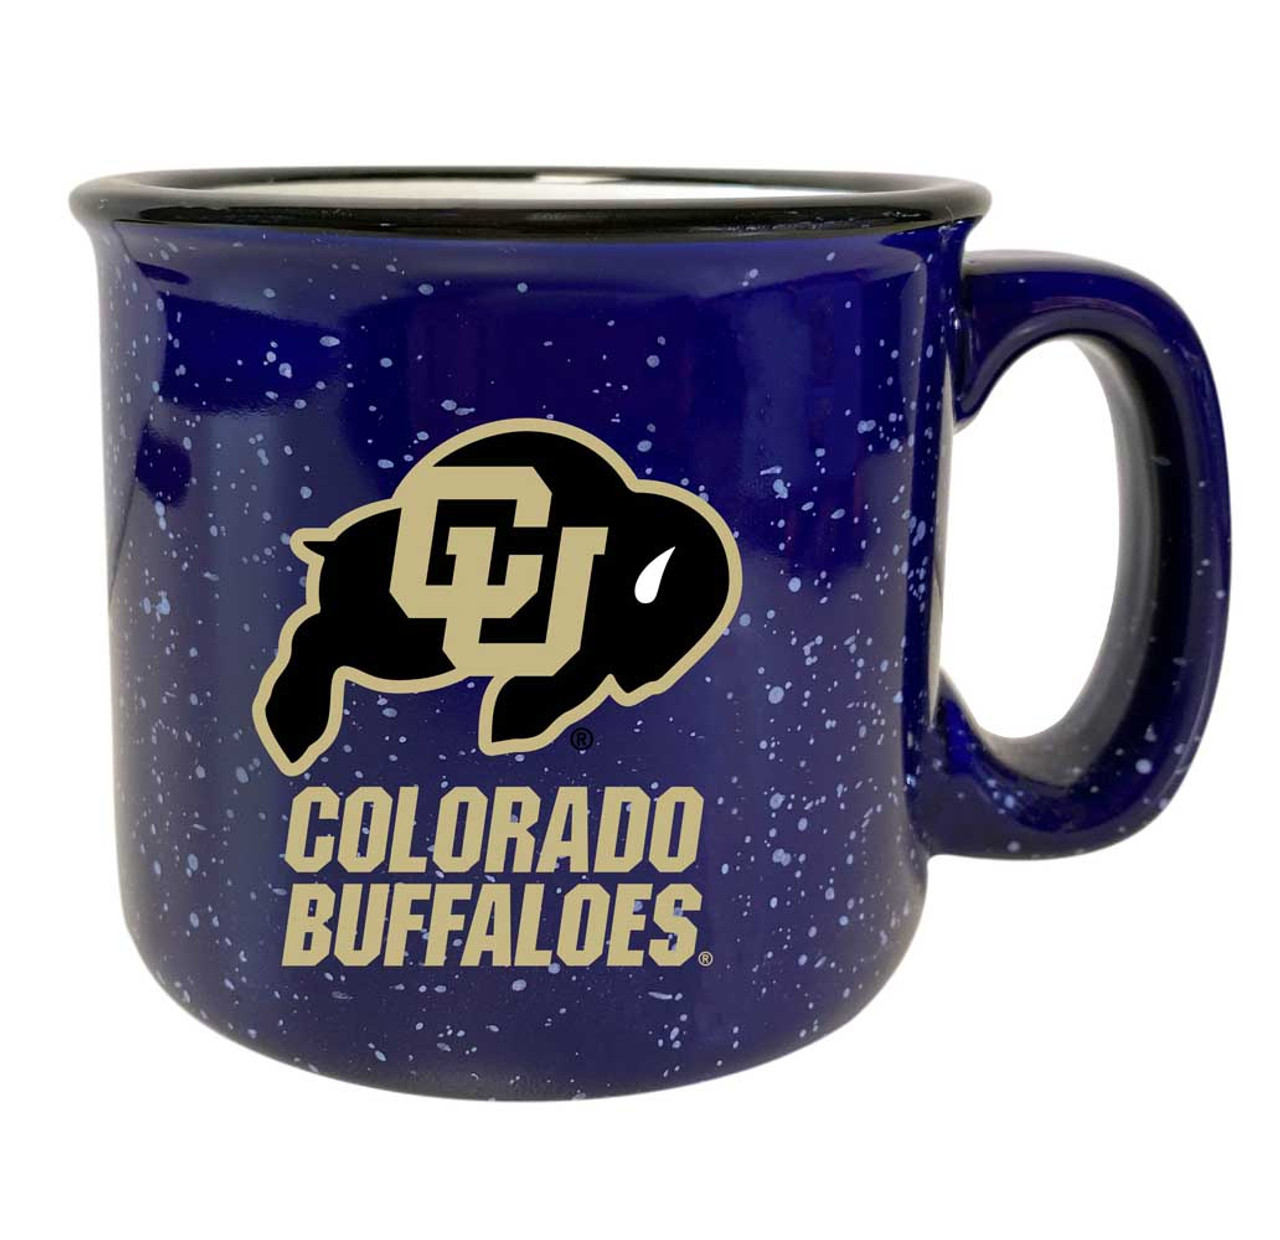 Colorado Buffaloes Speckled Ceramic Camper Coffee Mug (Choose Your Color).